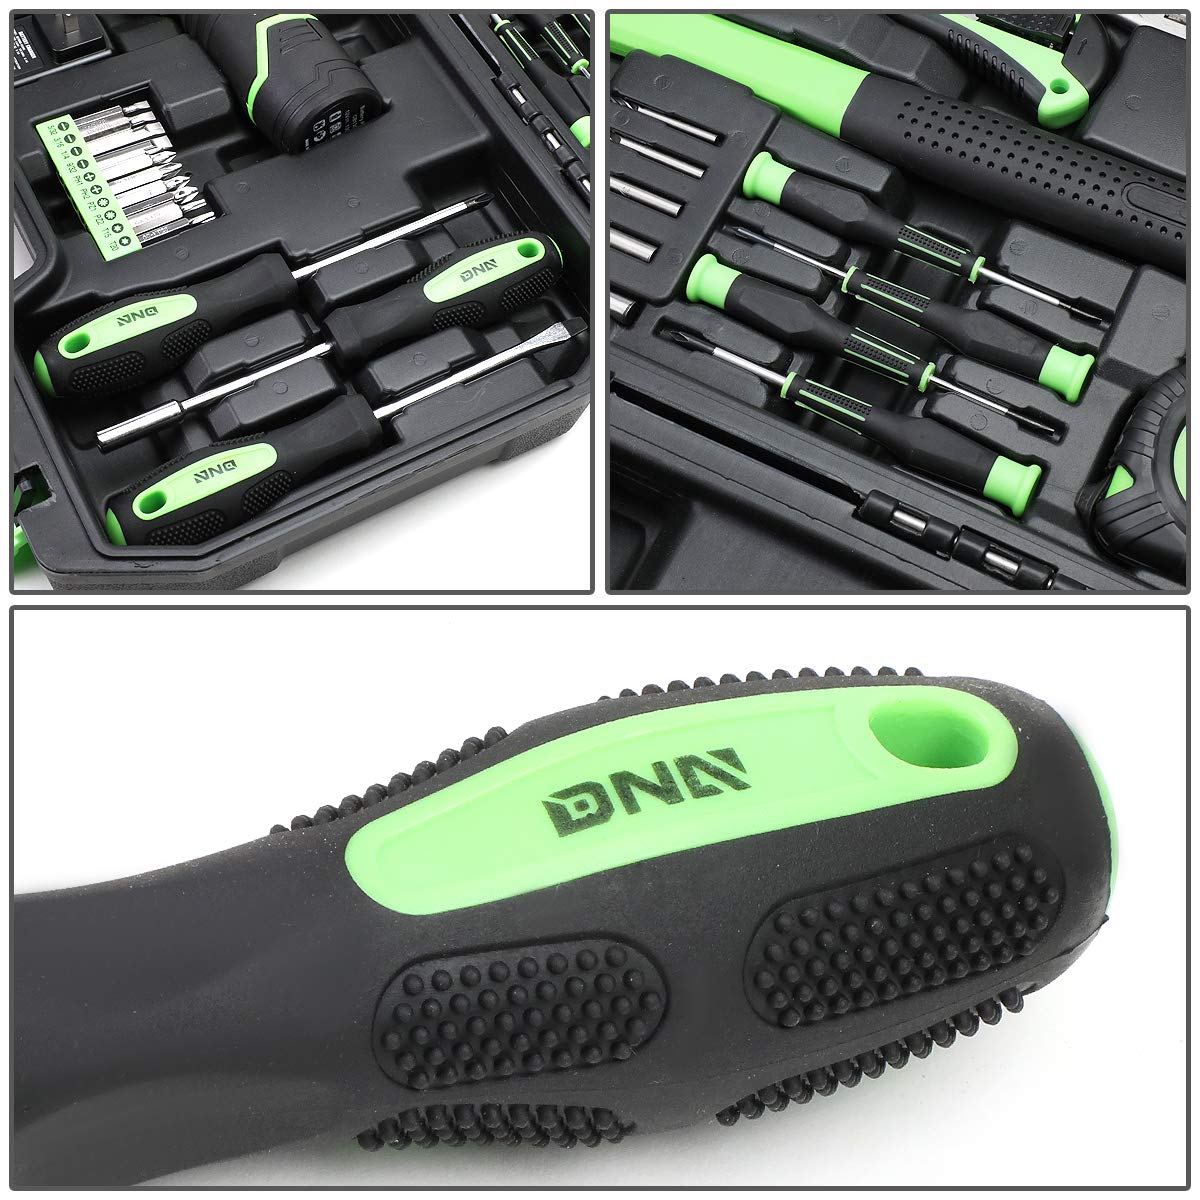 DNA MOTORING TOOLS-00018 Green 27 PCs 12V Cordless Power Drill Driver Bit Set w/Charger+Screwdrivers+Pliers Home Repair Kit, mint green